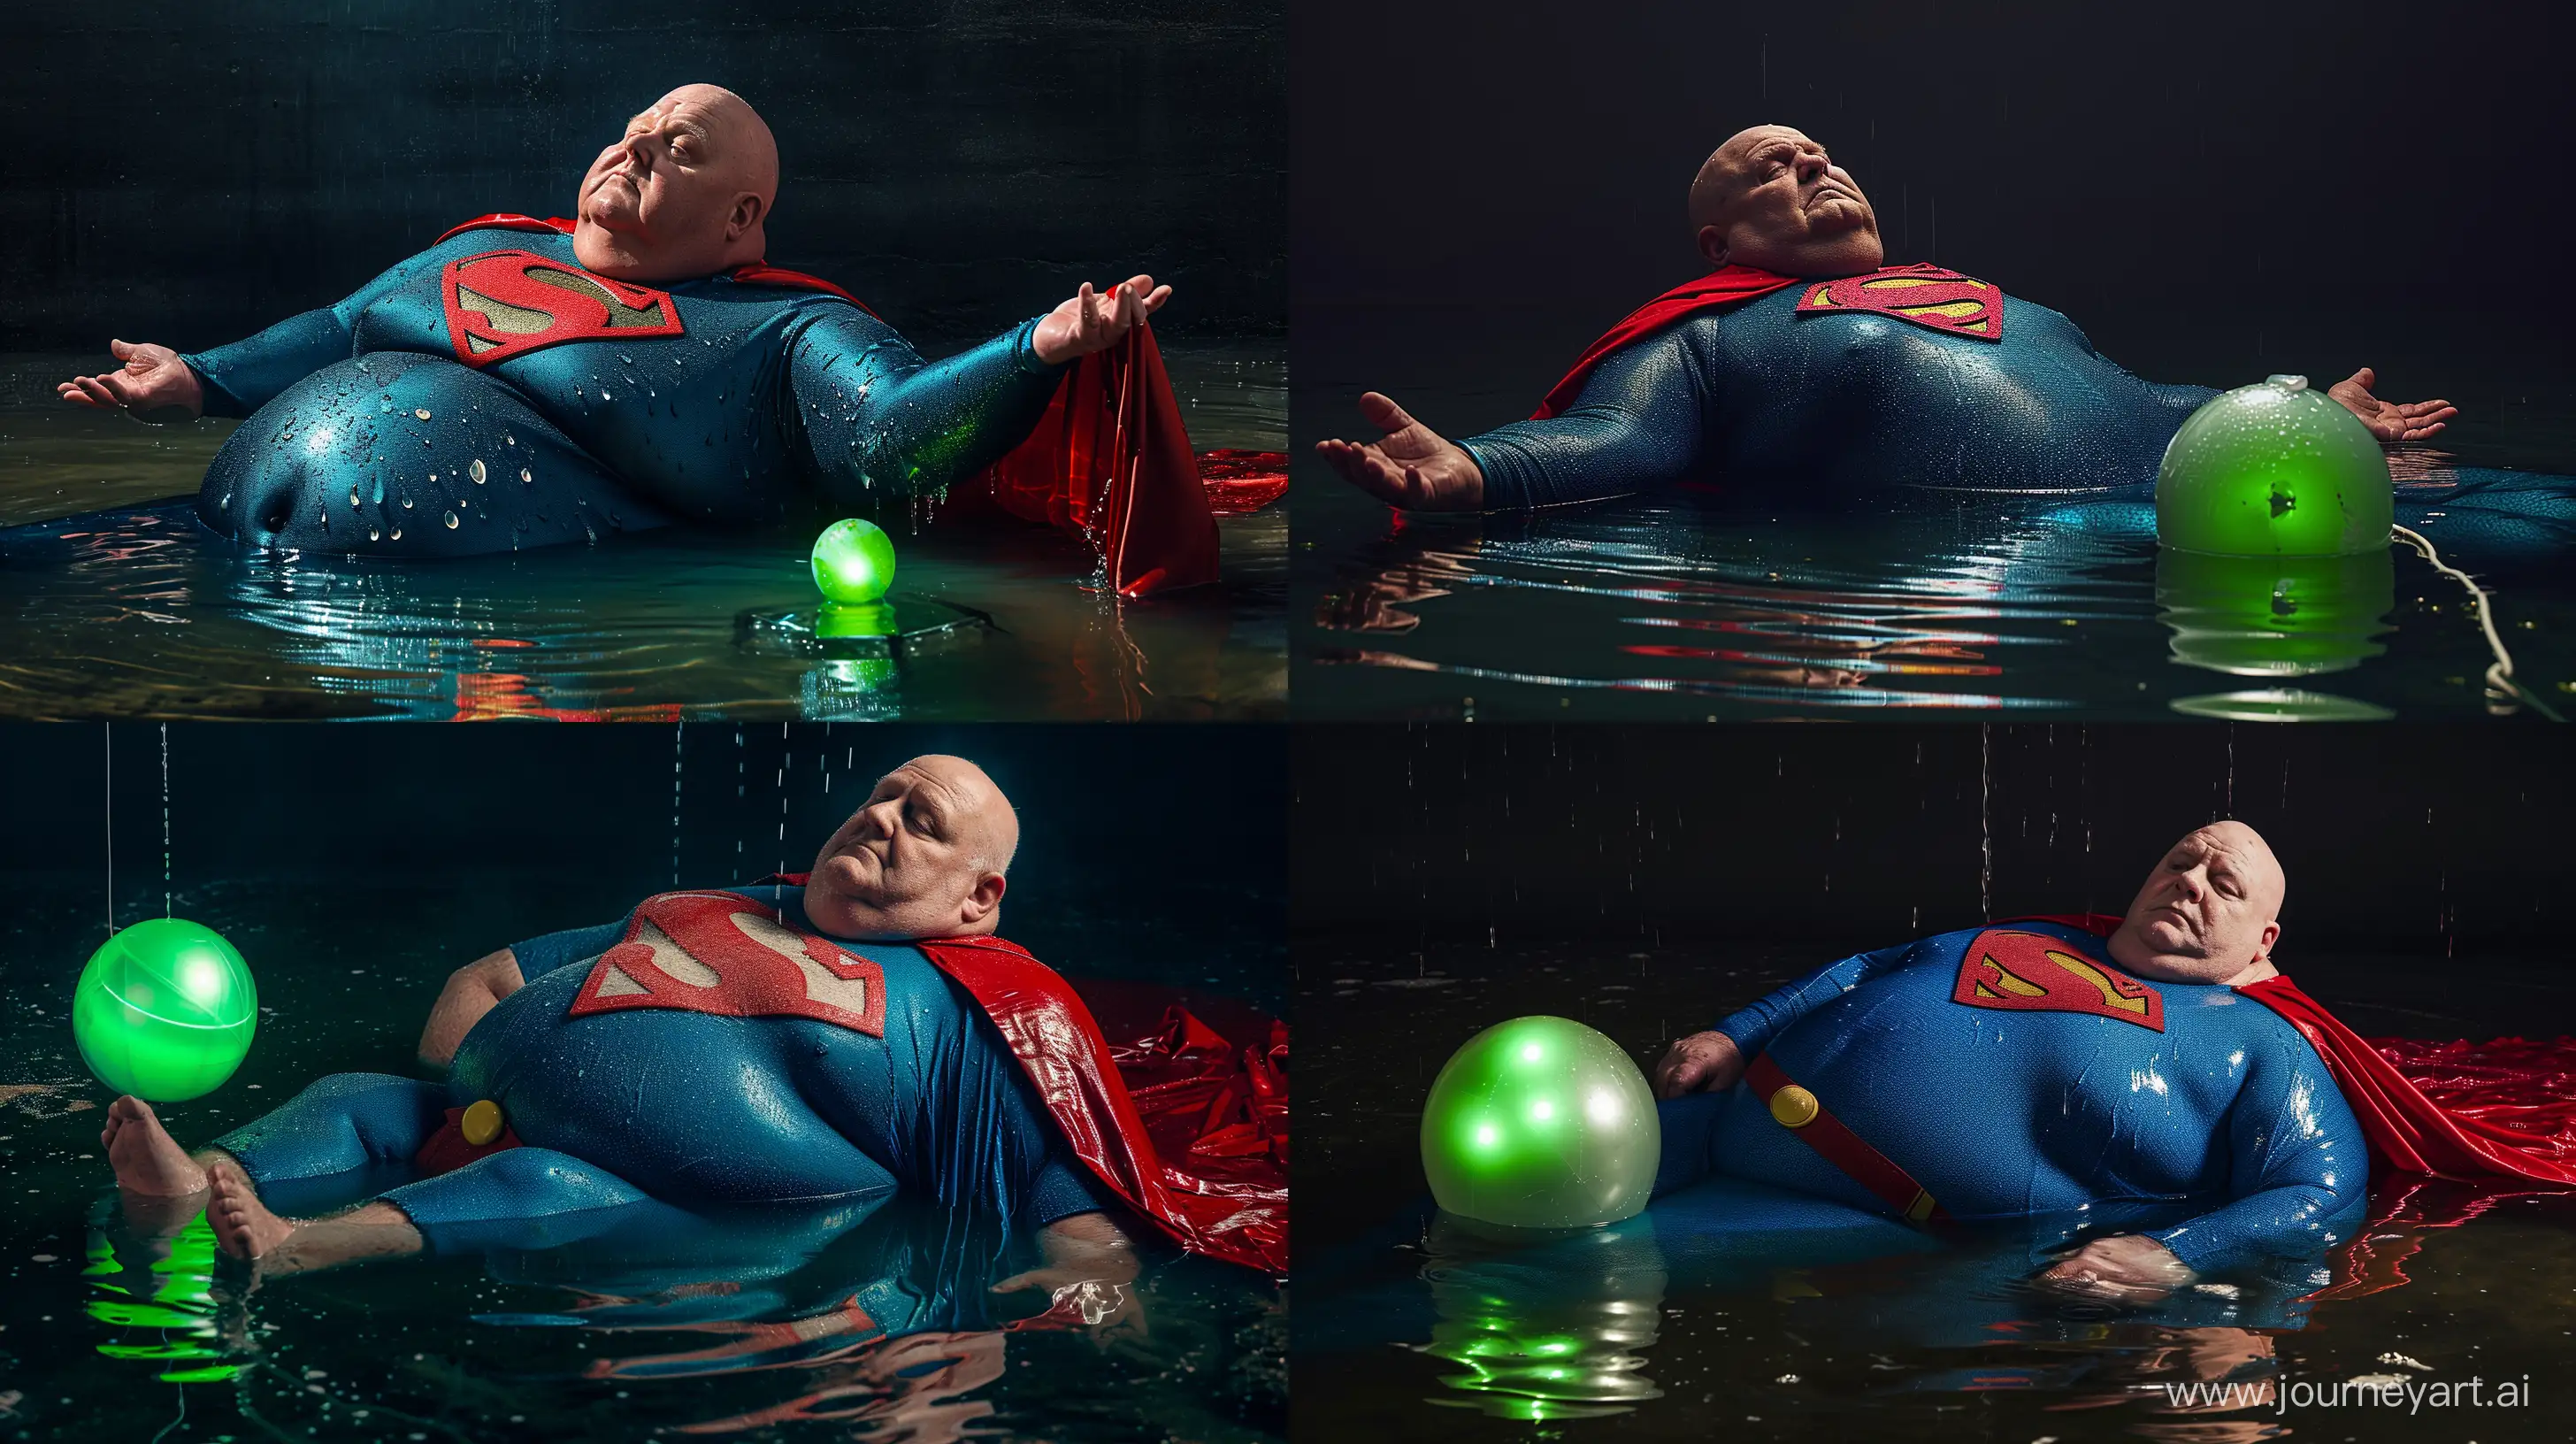 Elderly-Superman-Enjoys-Aquatic-Adventure-with-Illuminated-Ball